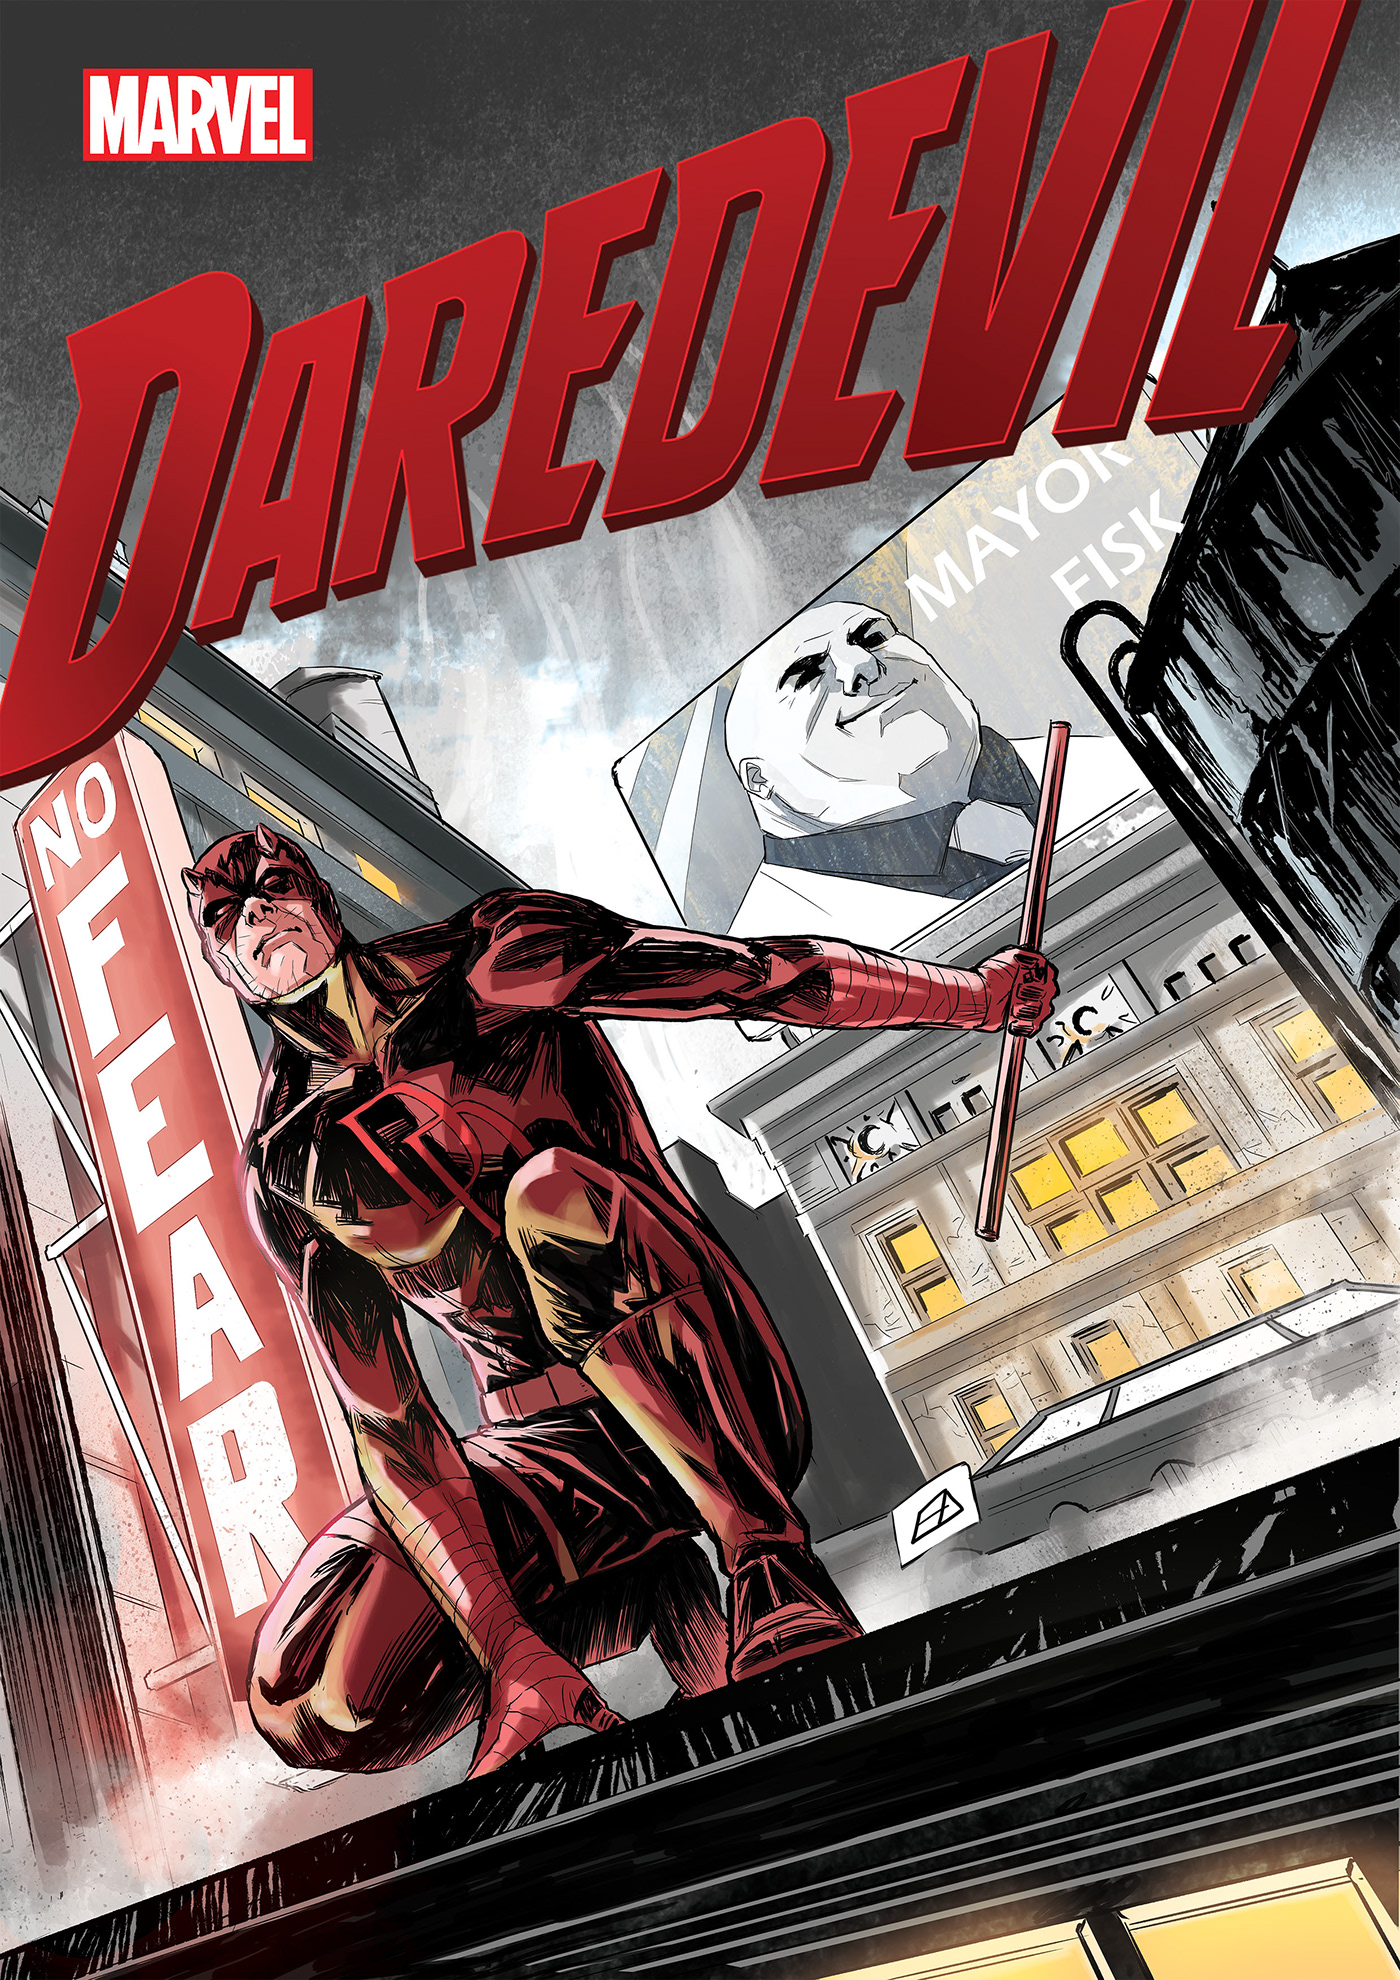 Daredevil hell's kitchen marvel blind SuperHero fanart comics cover